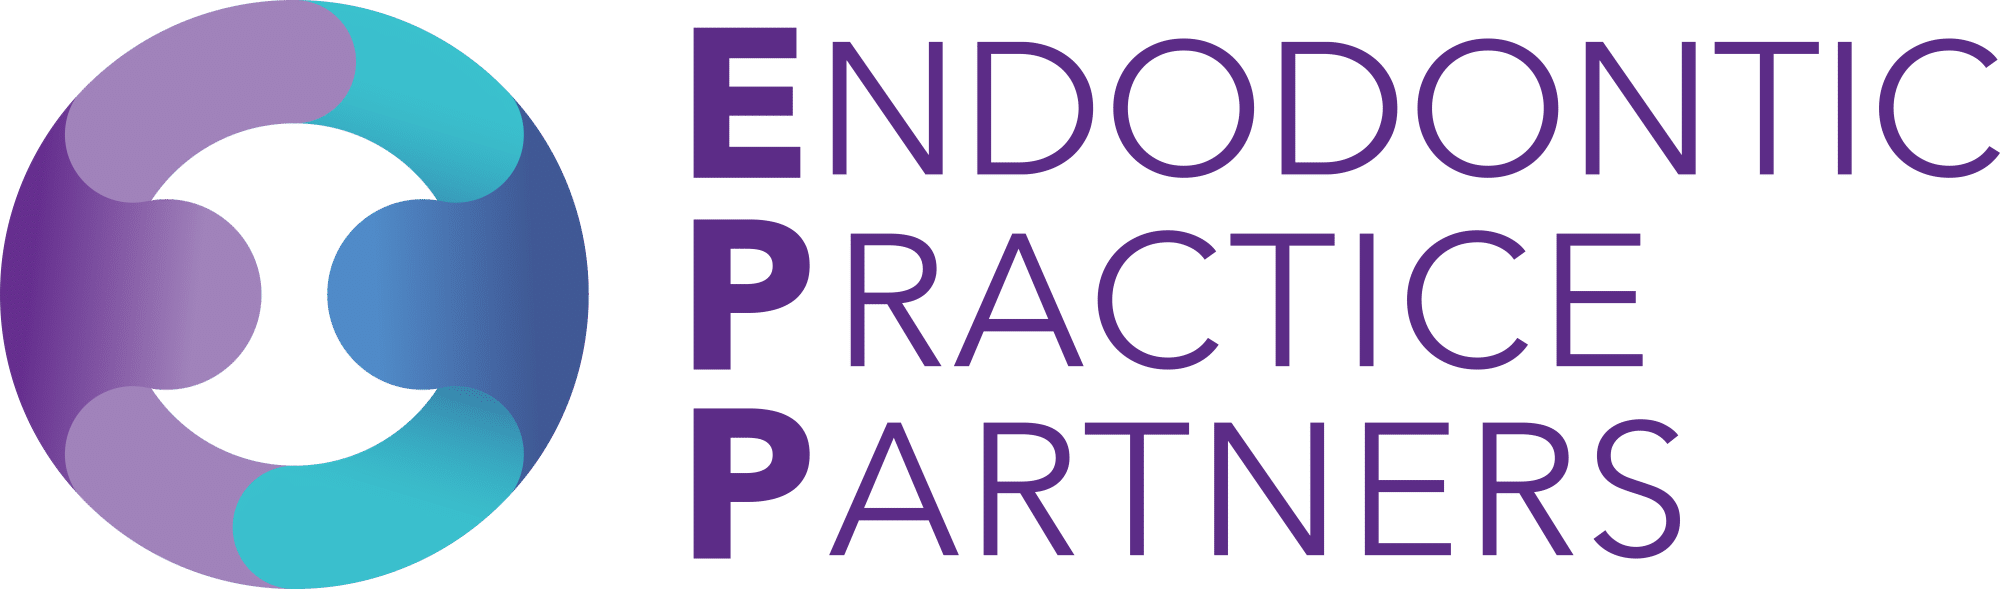 Endodontics Practice Partners Logo Color